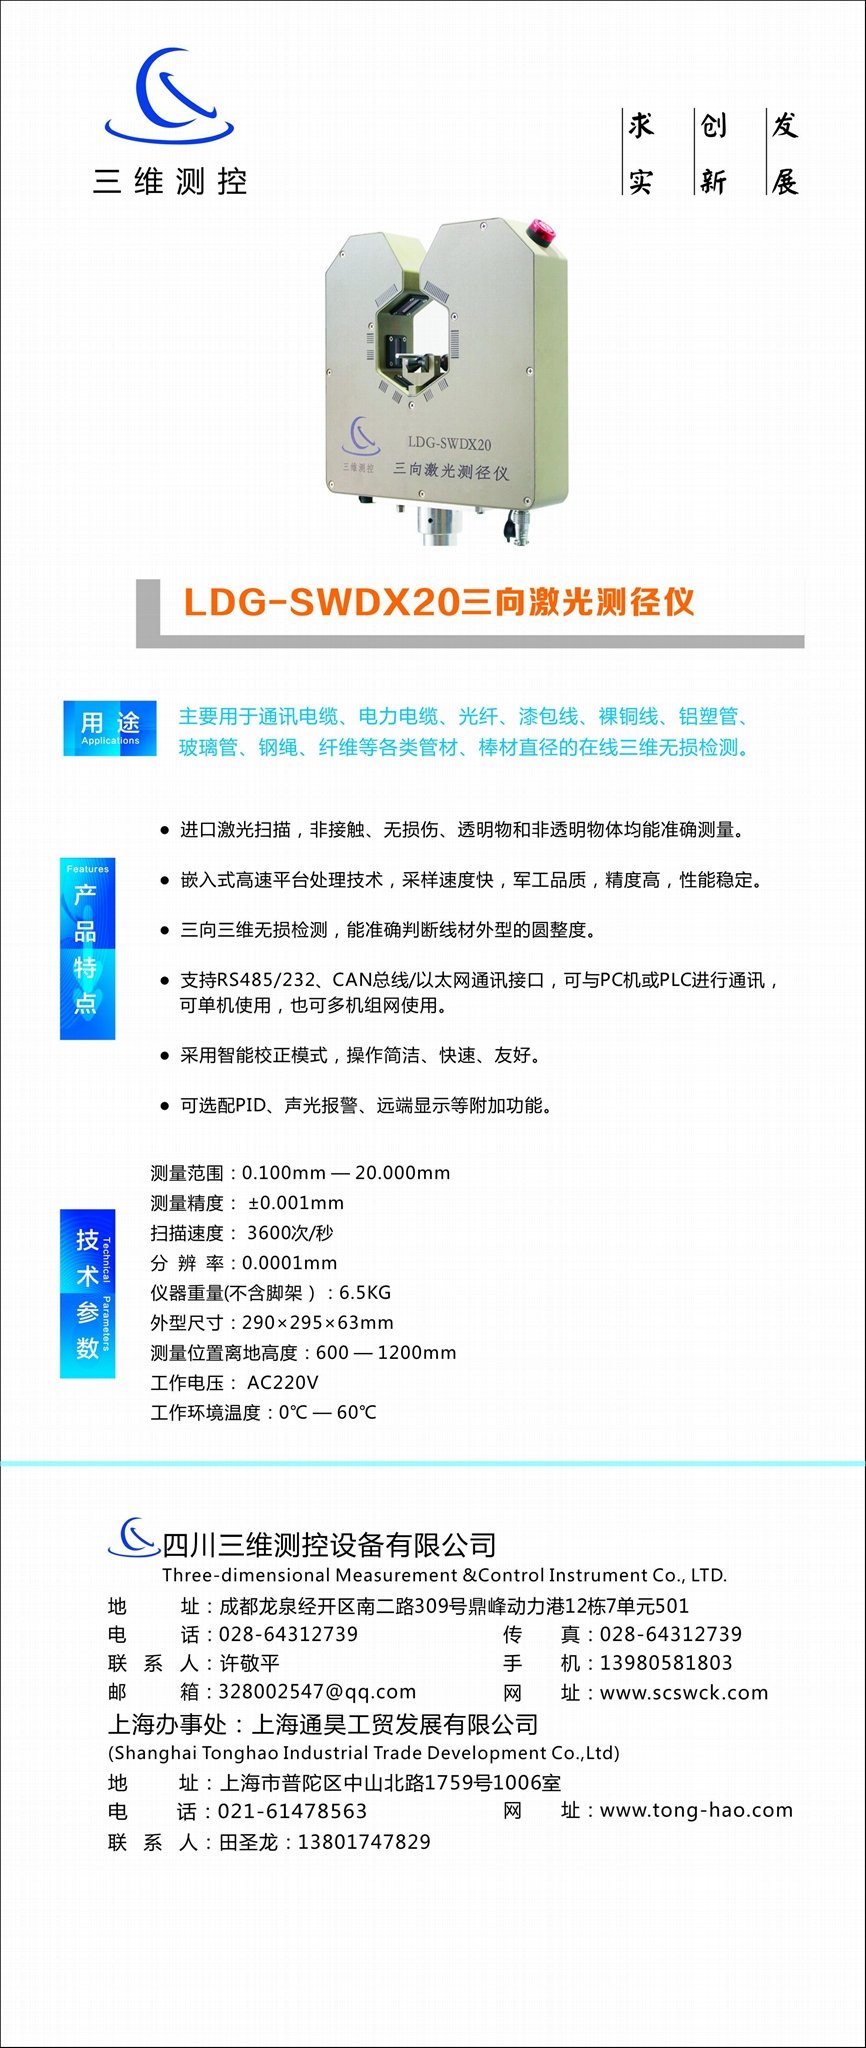 LDG--SWDX20 三向激光測徑儀 4